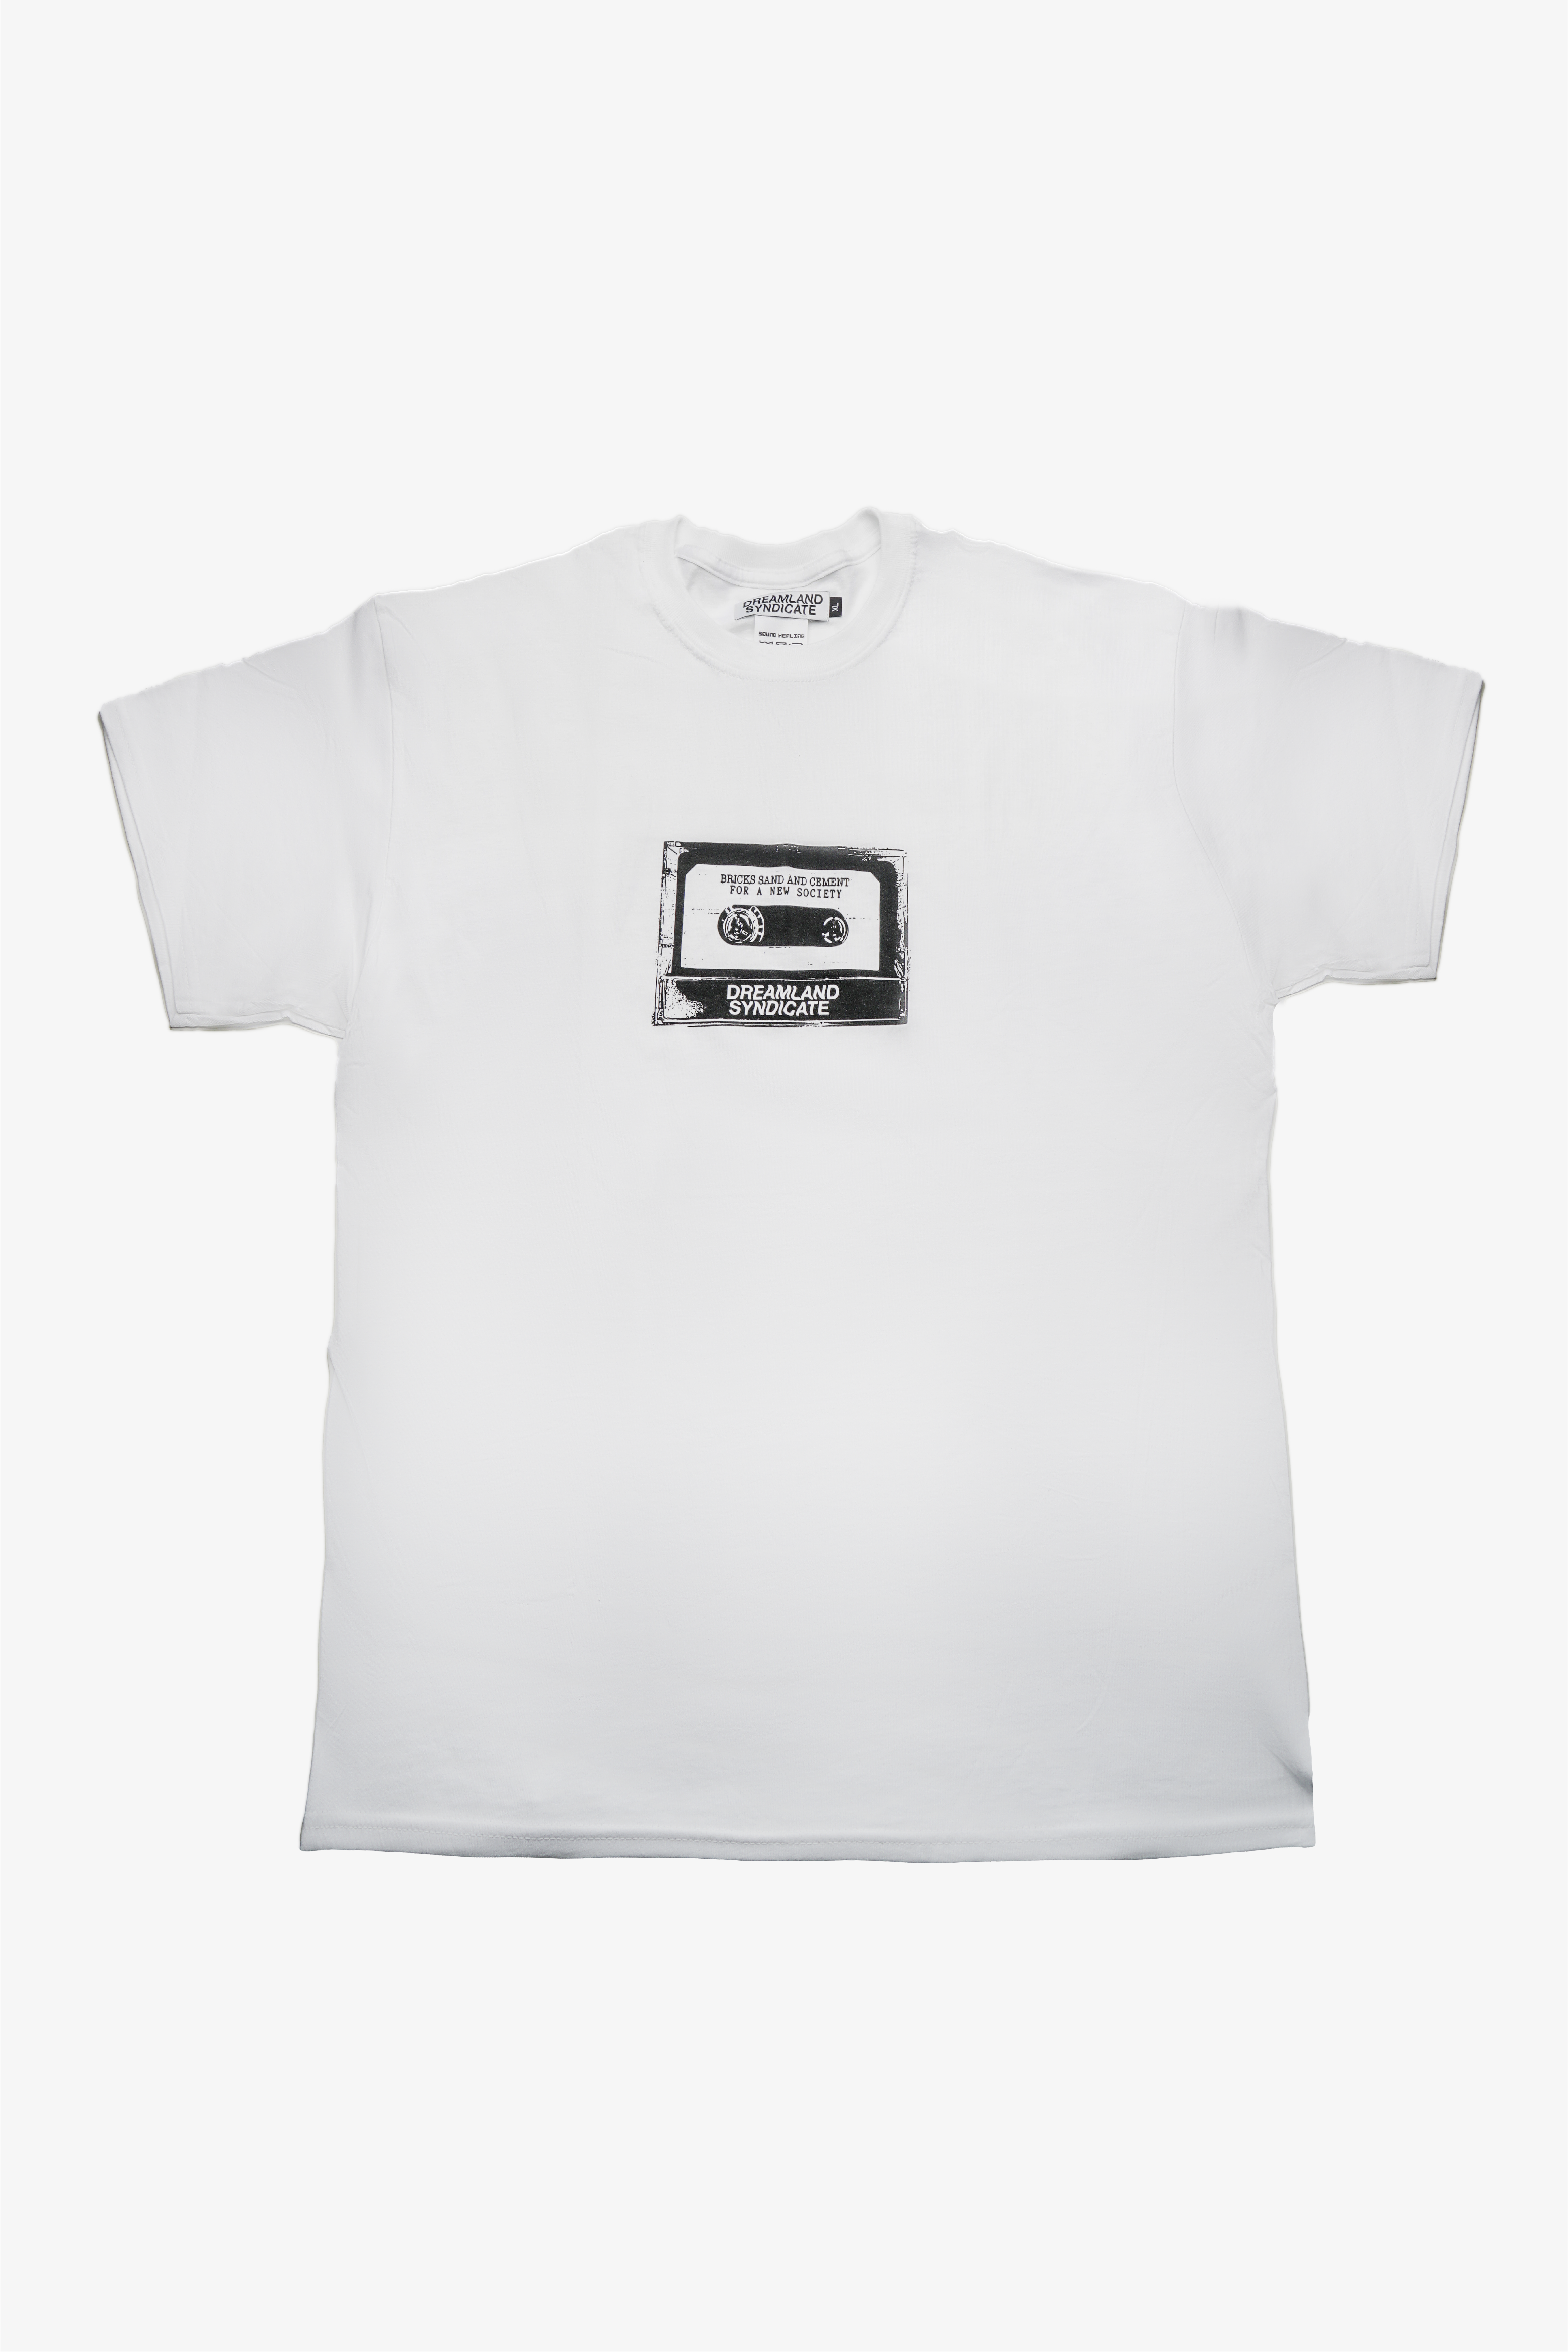 Selectshop FRAME - DREAMLAND SYNDICATE Tape Tee T-Shirts Dubai